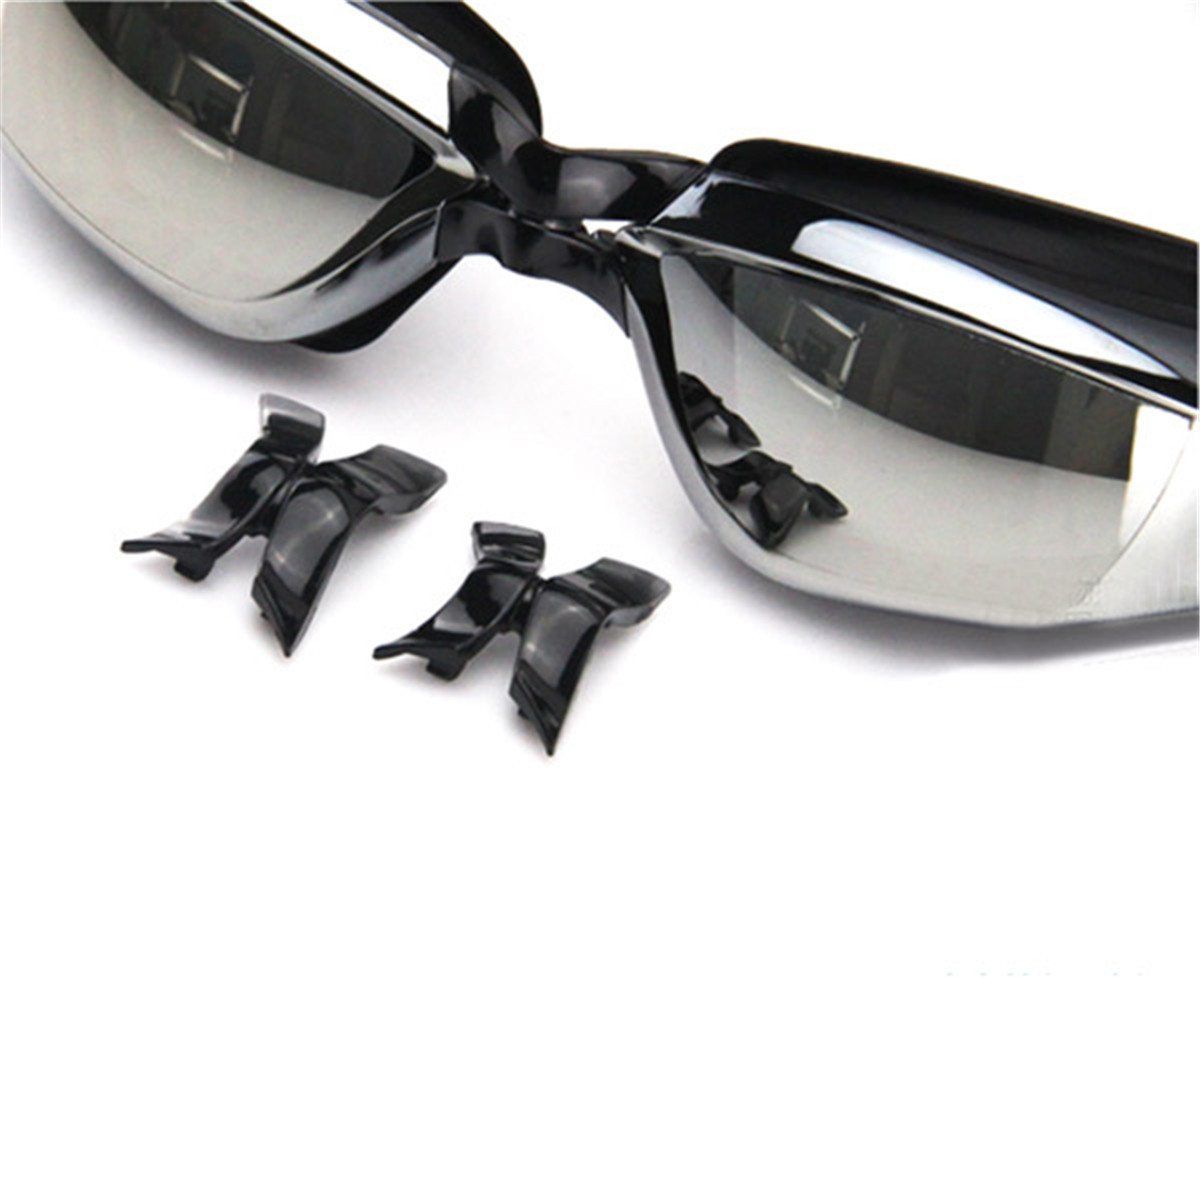 Swimming-Goggles-with-Earplug-Waterproof-Anti-Fog-Mirrored-Large-Frame-HD-Goggles-for-Men-Women-1884381-4